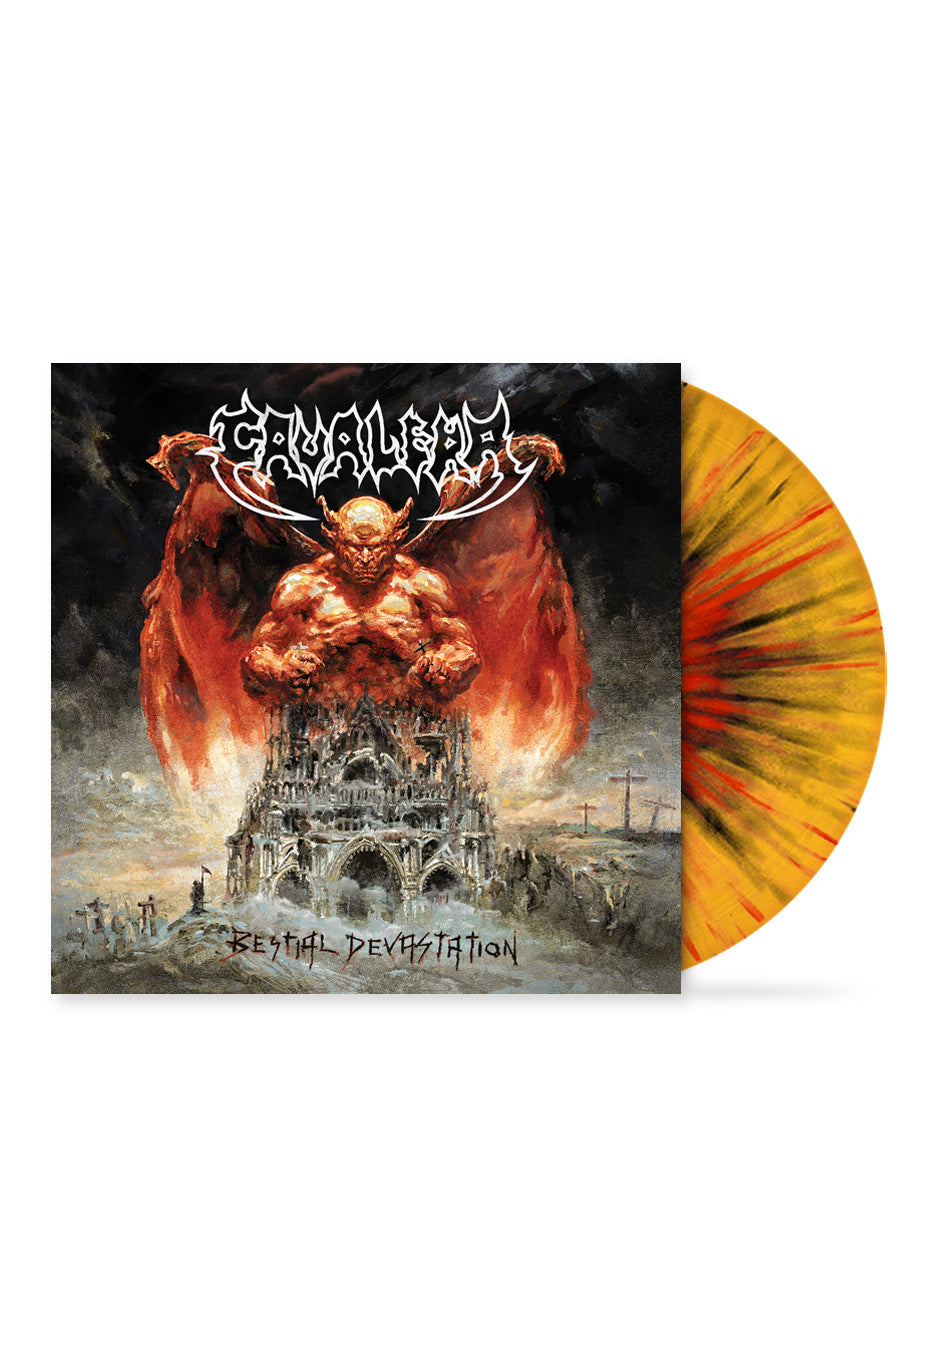 Cavalera - Bestial Devastation Ltd. Transparent Orange w/ Red/Black - Splattered Vinyl